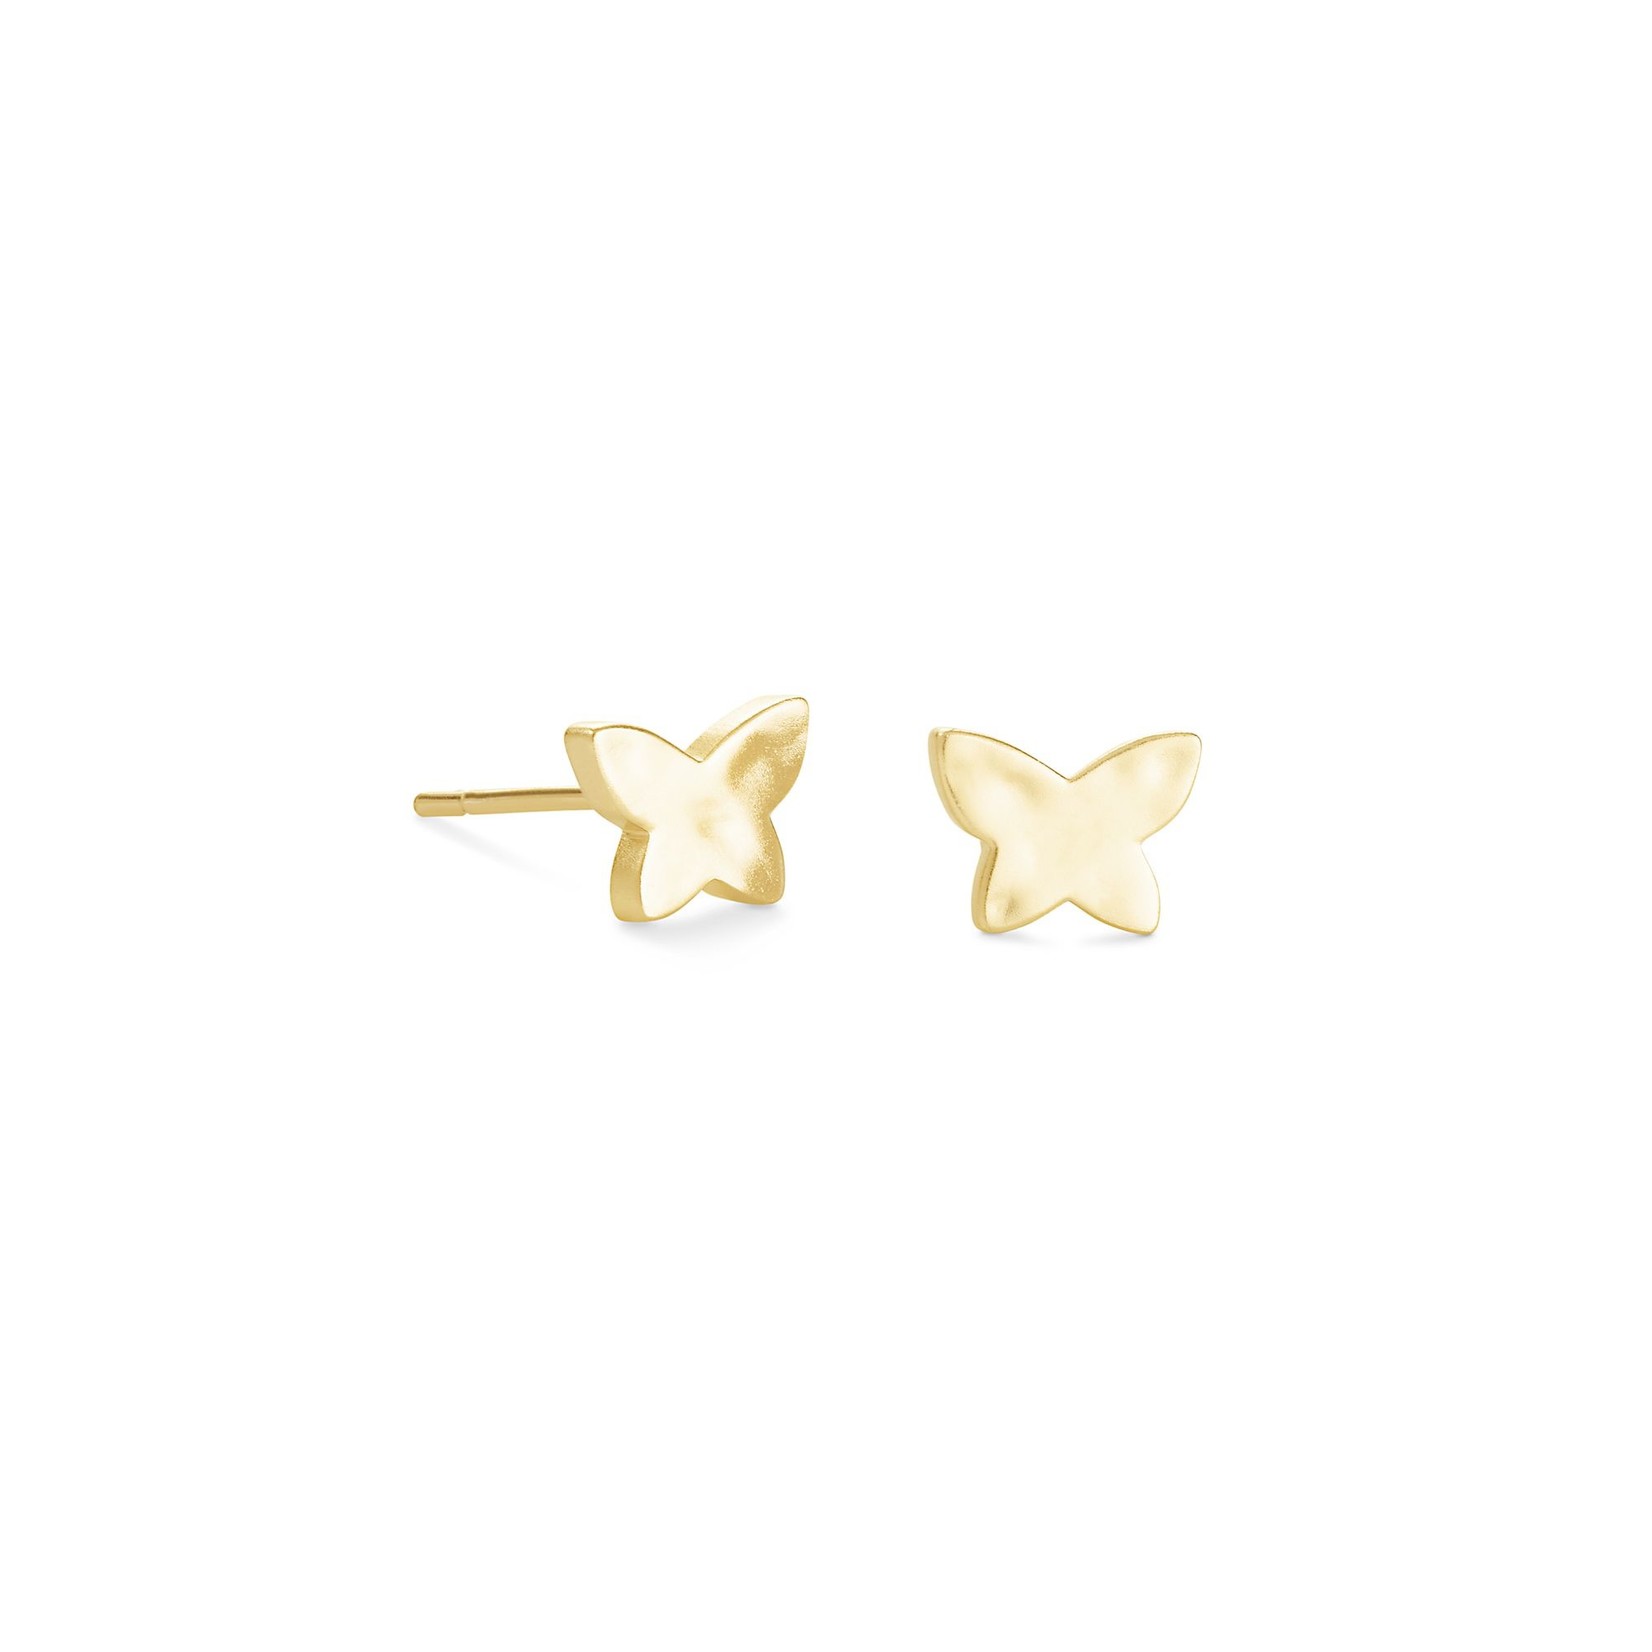 The Lillia Gold Butterfly Stud Earrings